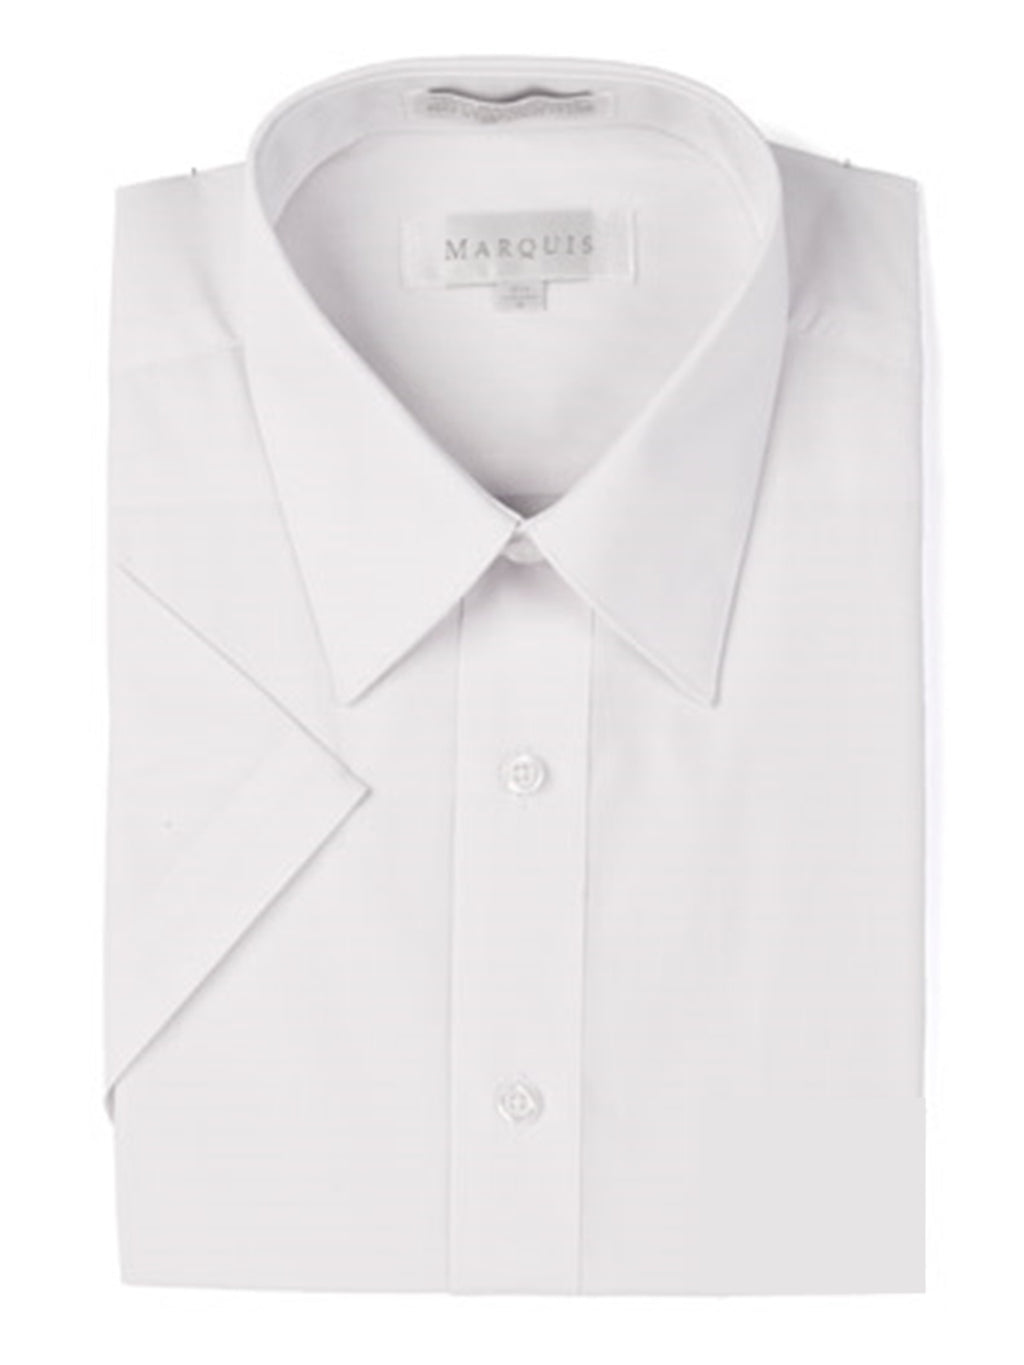 Marquis Men's Short Sleeve Slim Fit Dress shirt - S To XXL Men's Dress Shirts Marquis White Large/16.5 